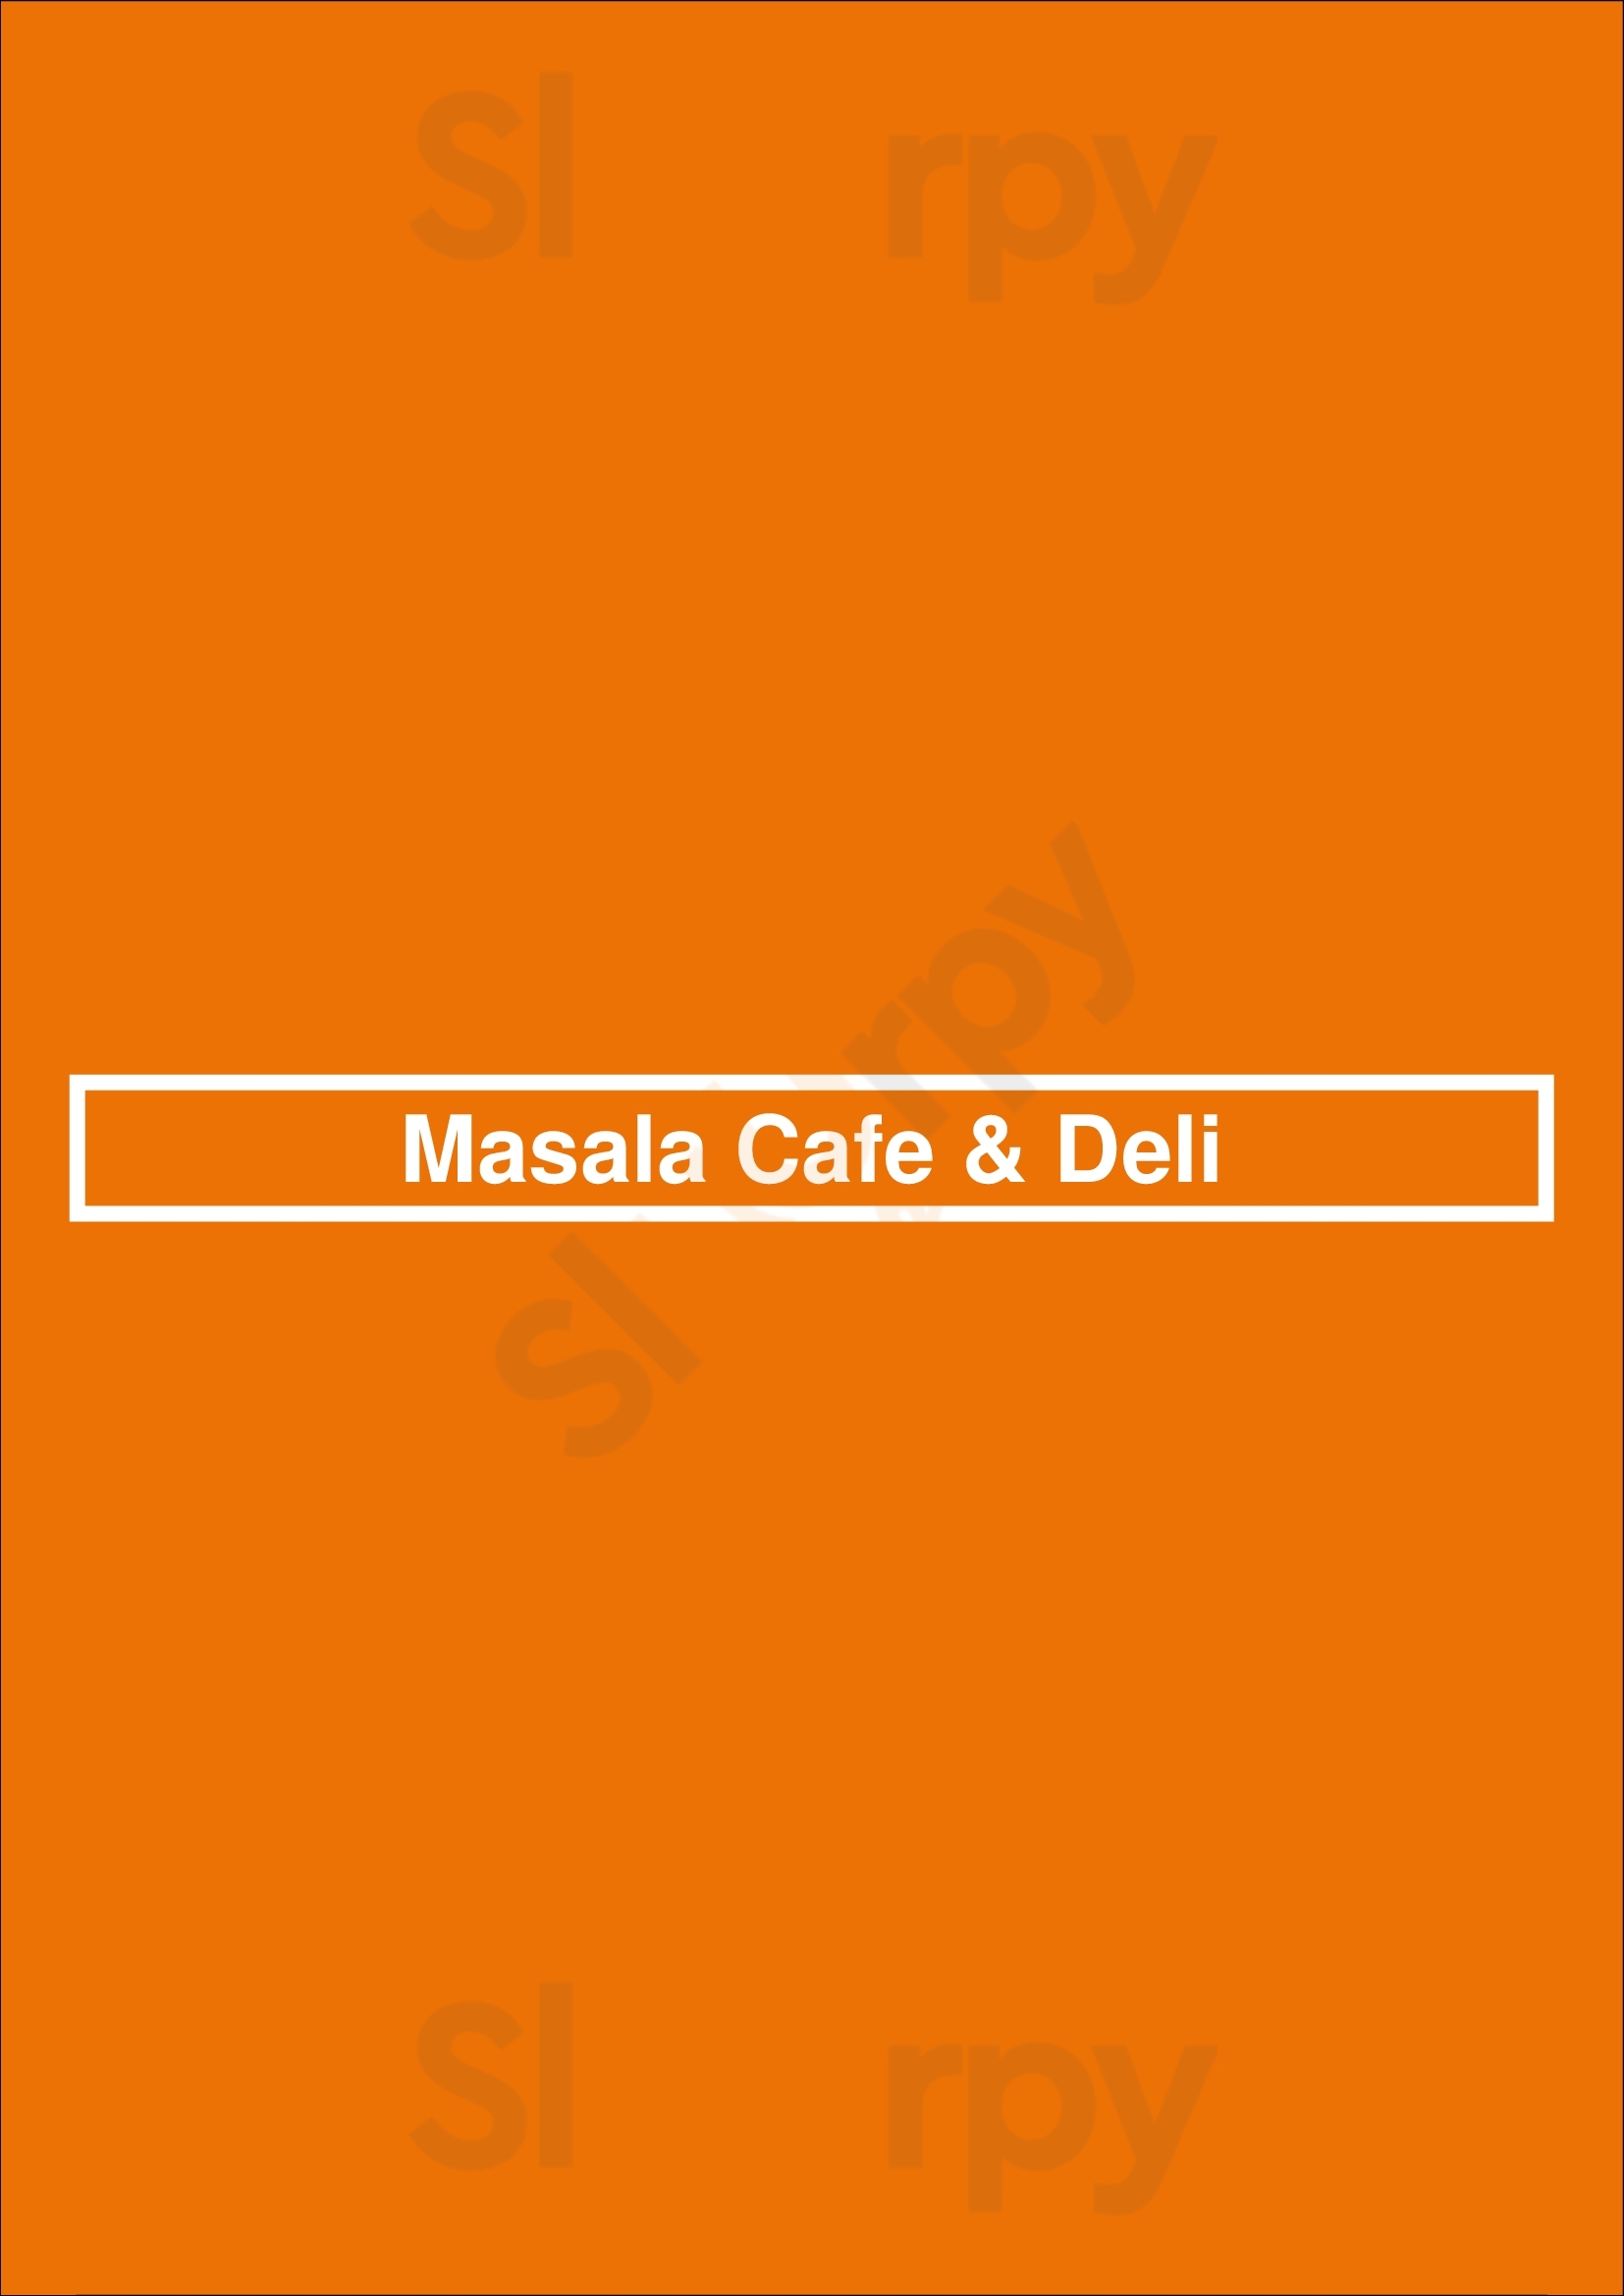 Masala Cafe & Deli Newark Menu - 1